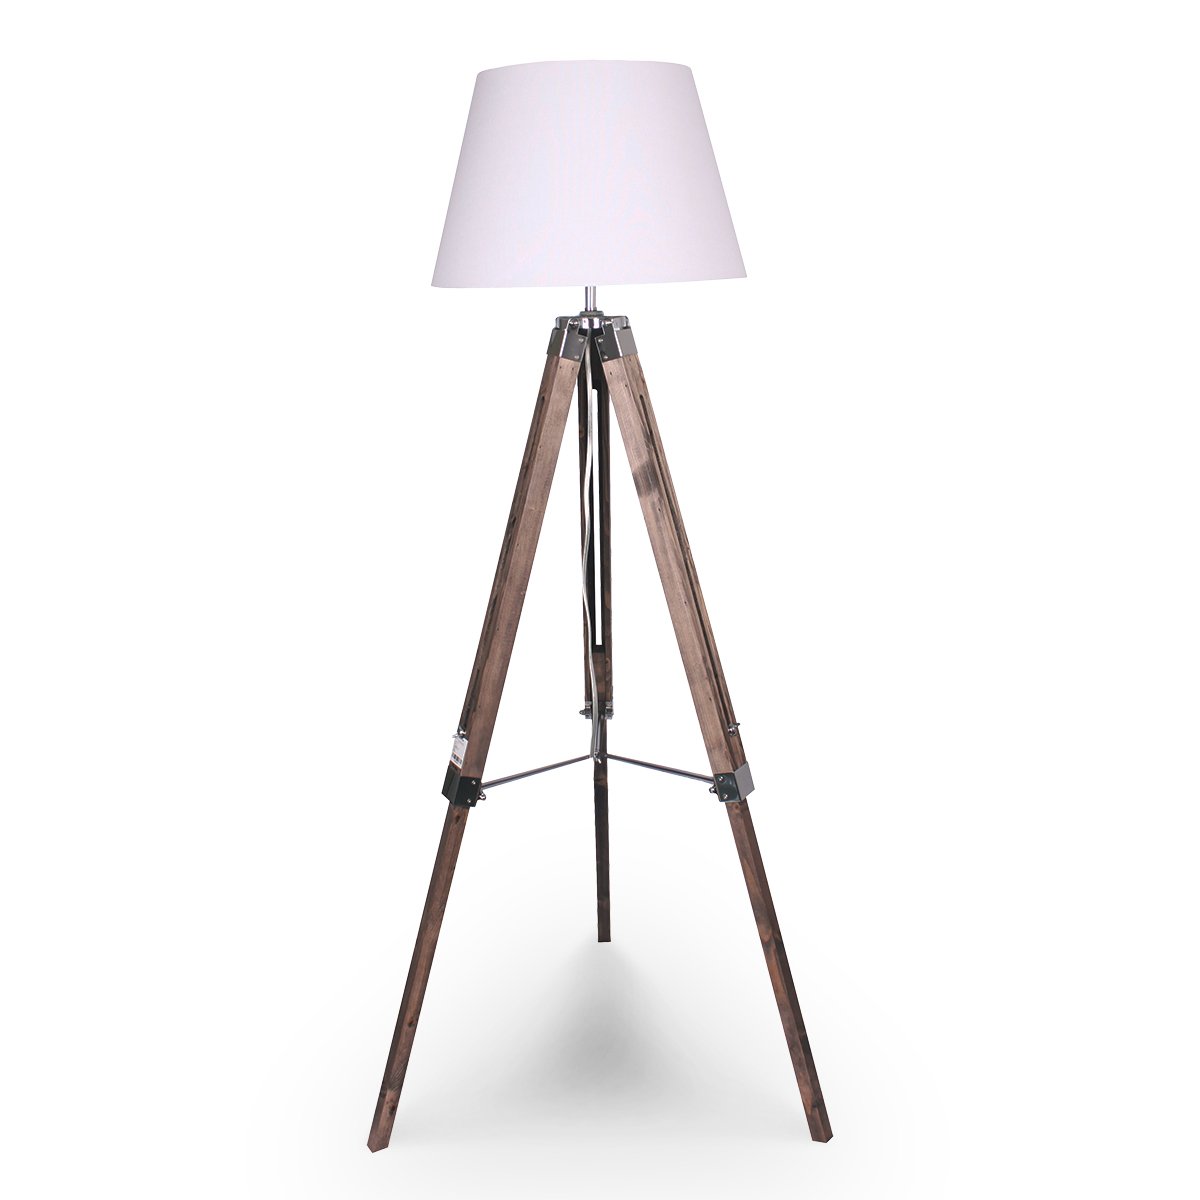 Sarantino Solid Wood Tripod Floor Lamp Adjustable Height White Shade 2